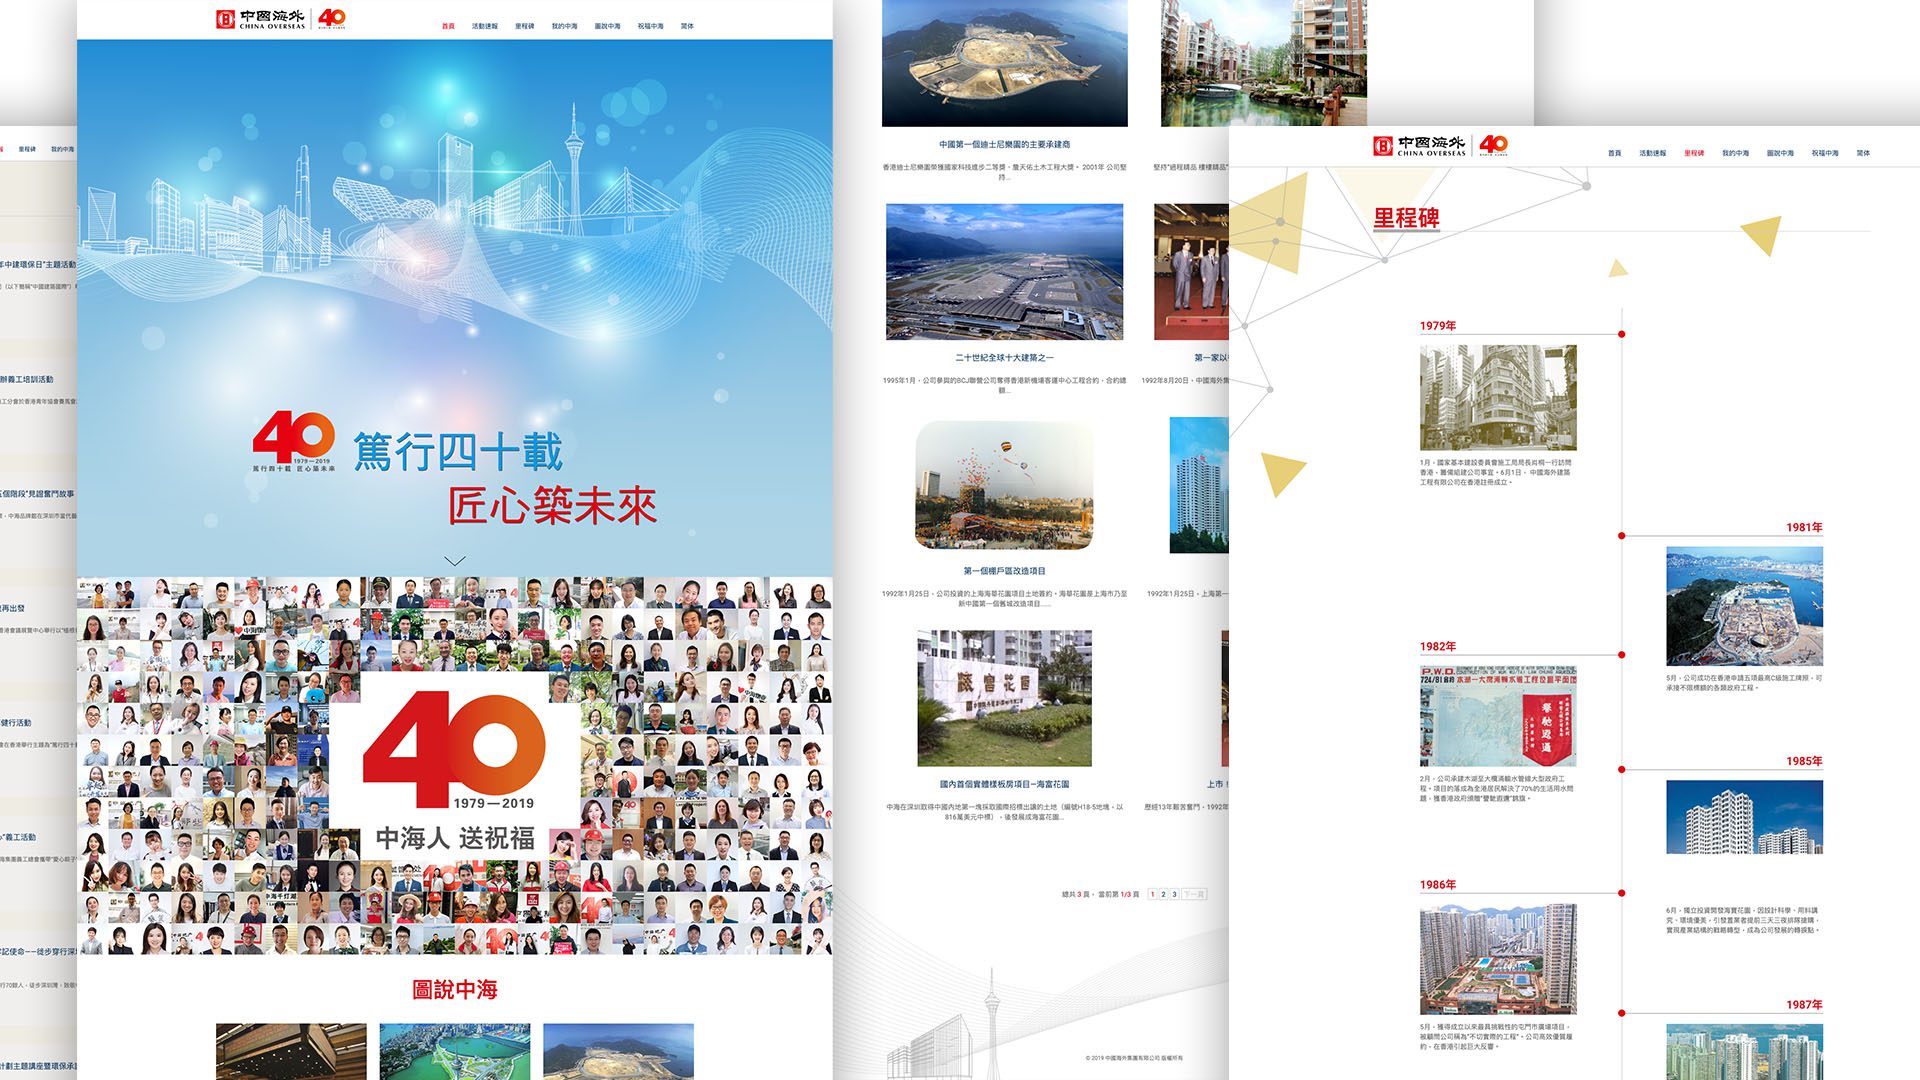 China OverSeas Web design agency Miracle Digital